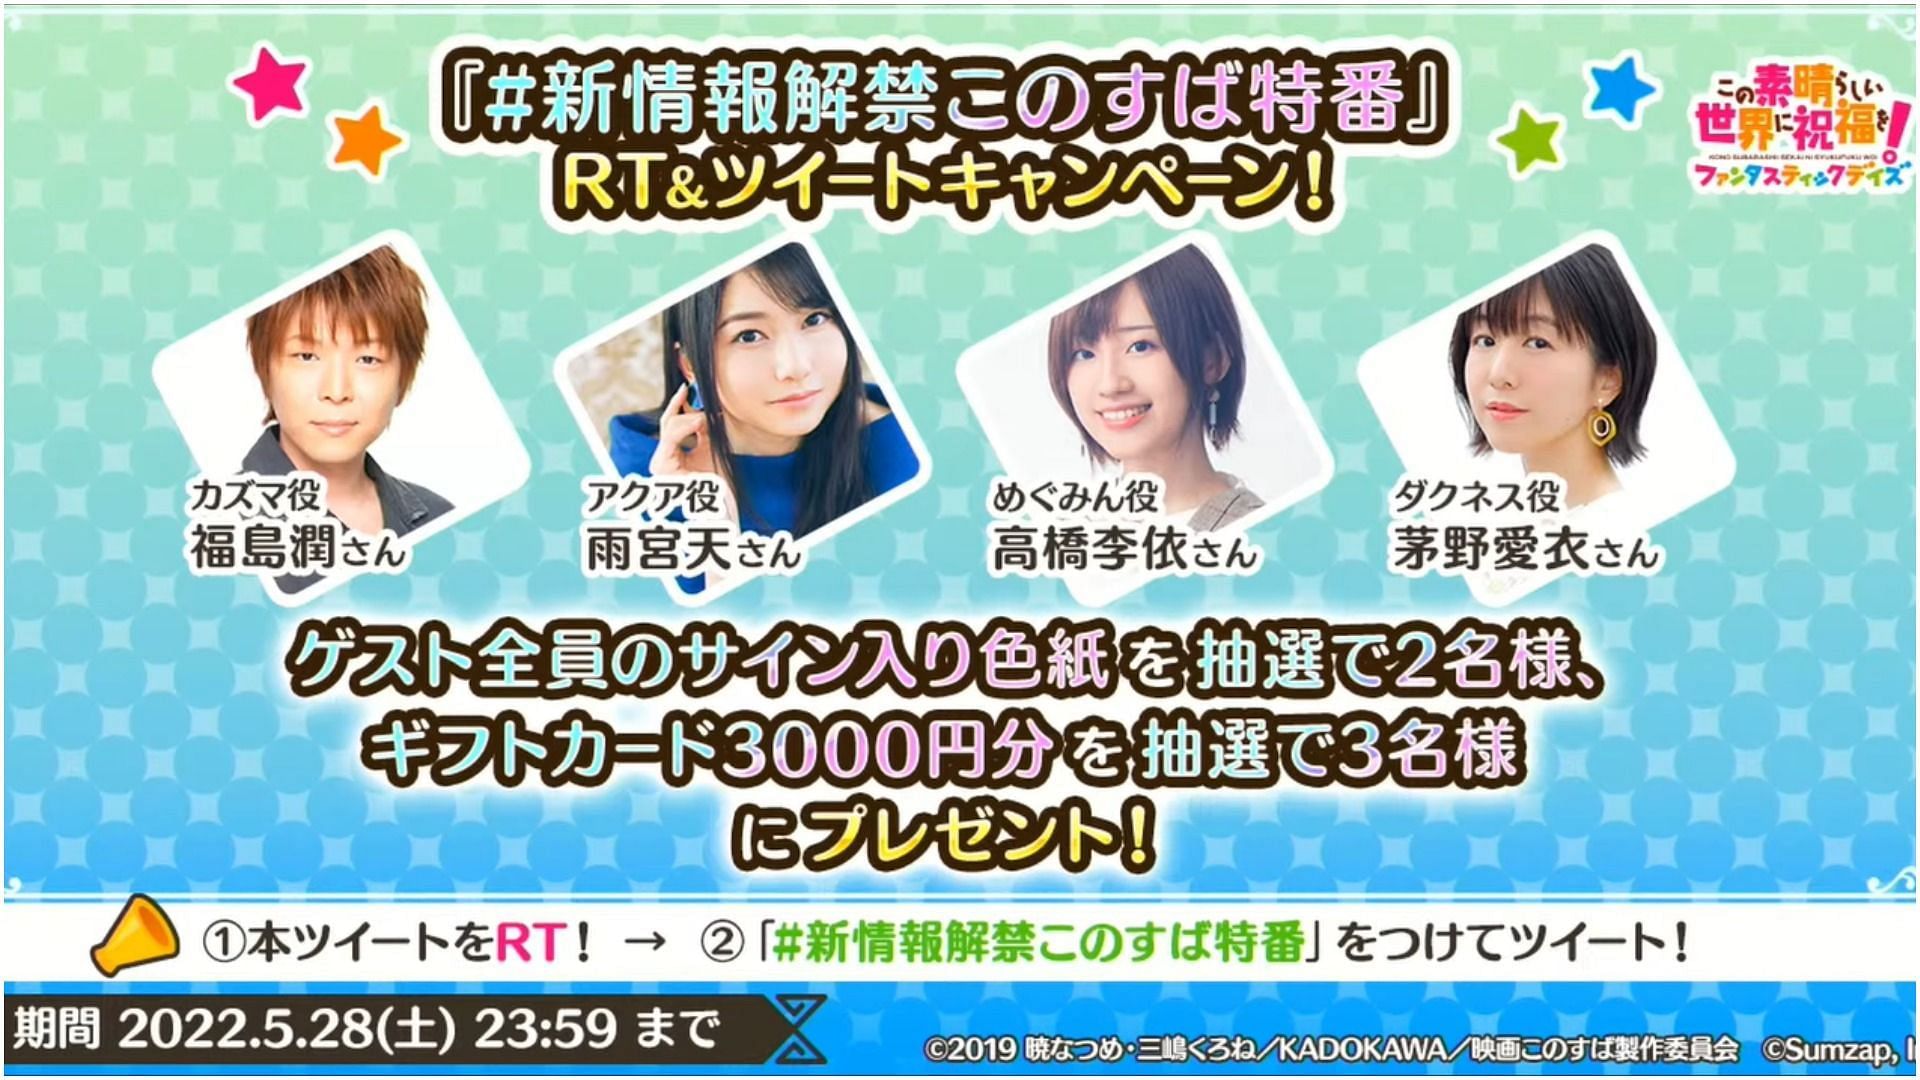 Voice actors of Aqua, Kazuma, Lalatina, and Megumin revealed (Image via KADOKAWAanime)